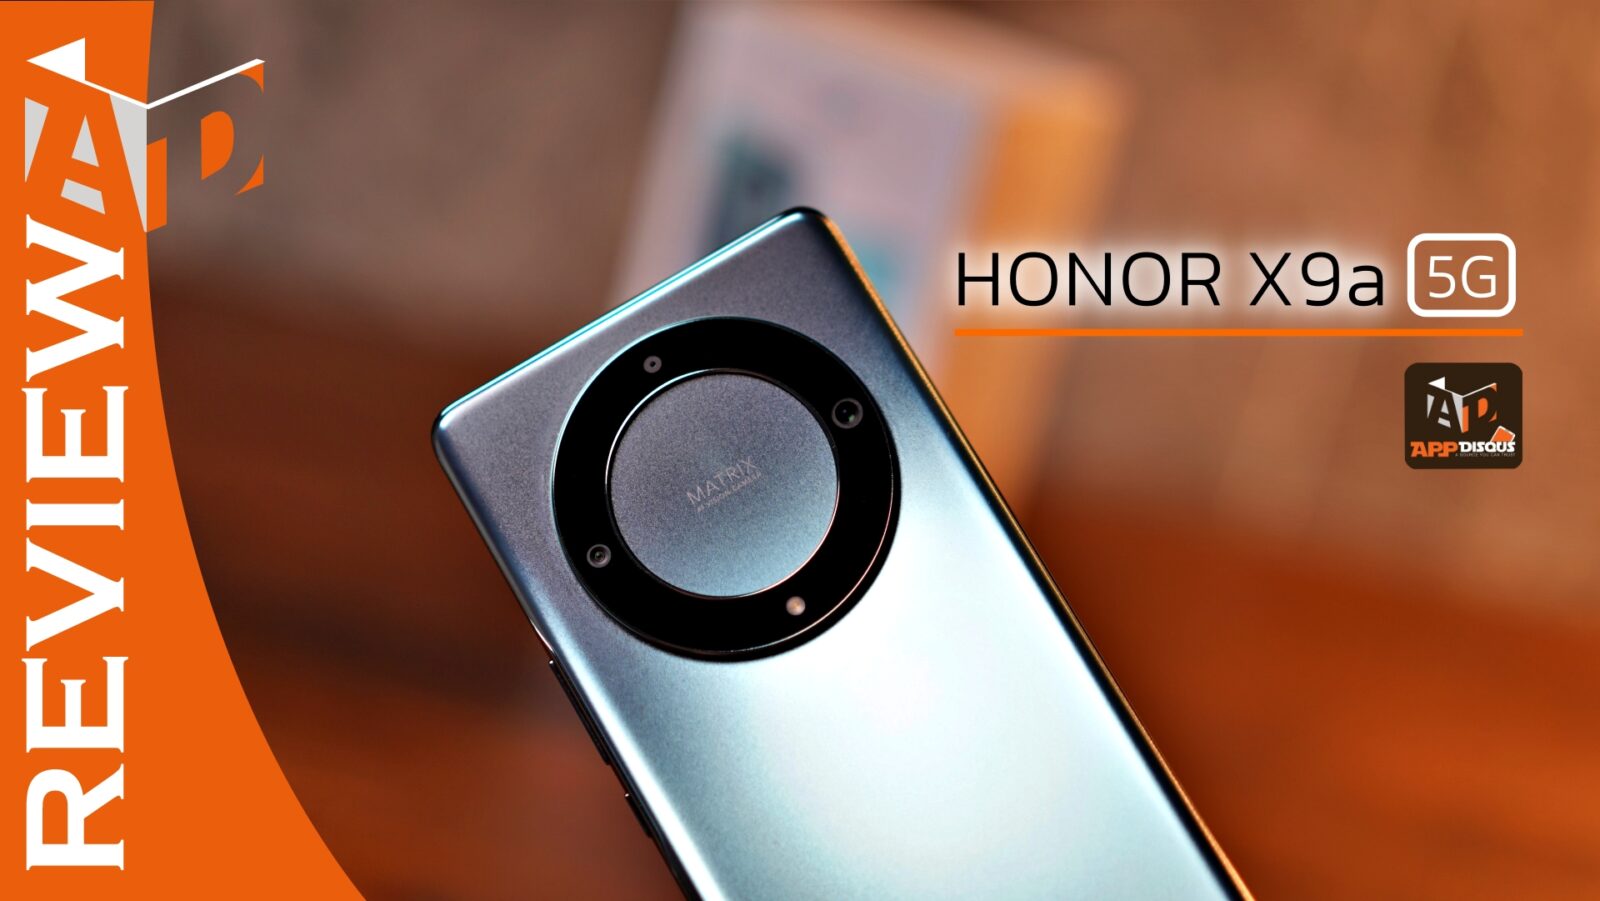 review Honor X9a | honor | รีวิว HONOR X9a 5G ดีไซน์พรีเมียมสวยงาม น้ำหนักเบา ราคาหมื่นต้น